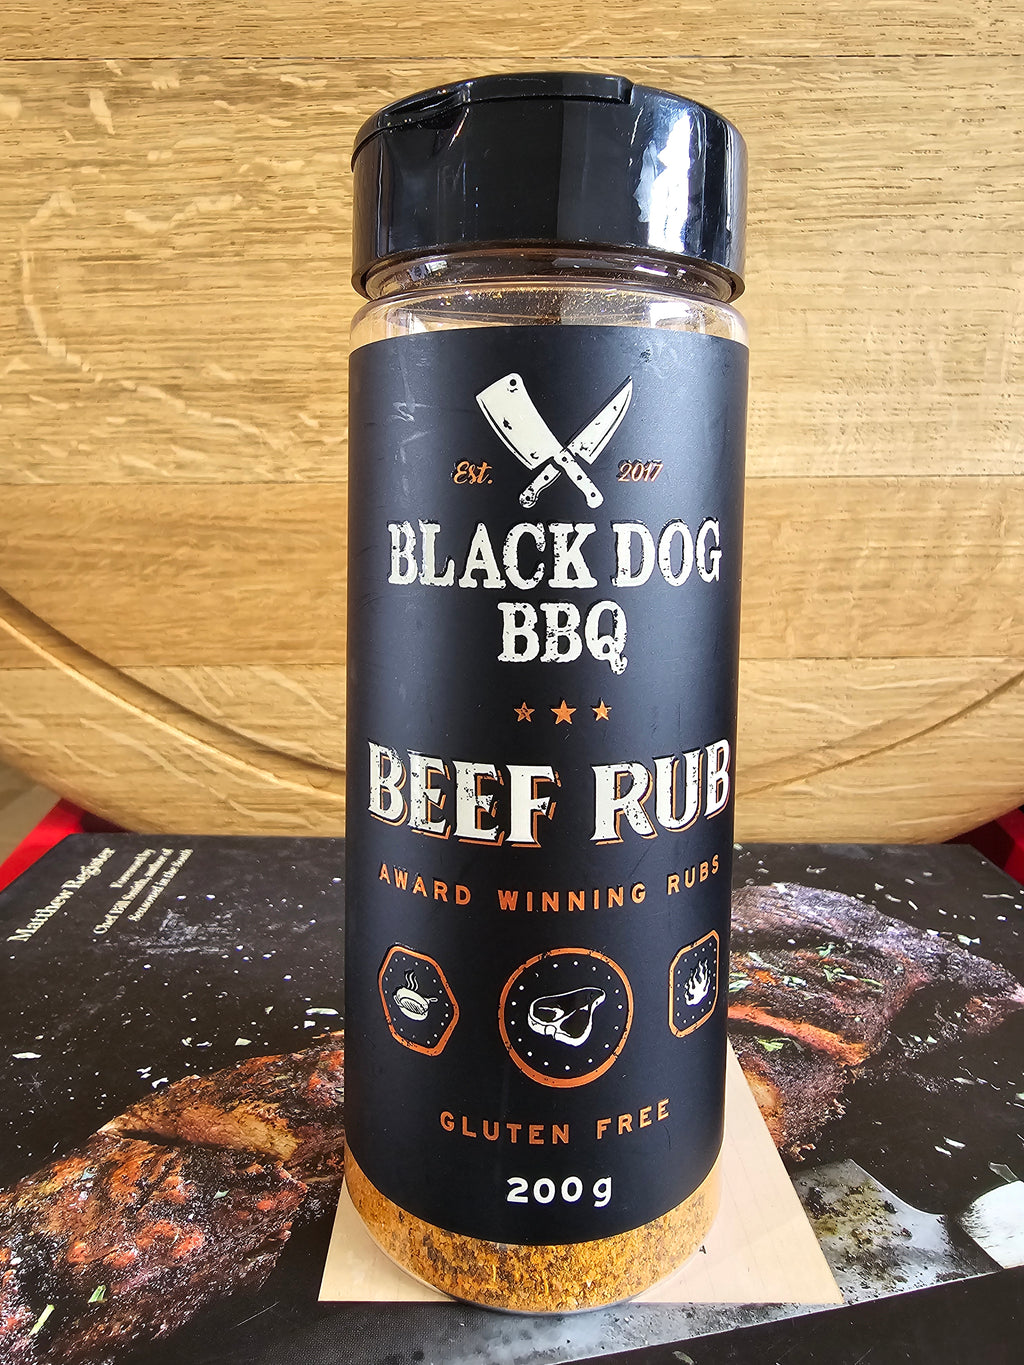 Beef Rub by Black Dog BBQ